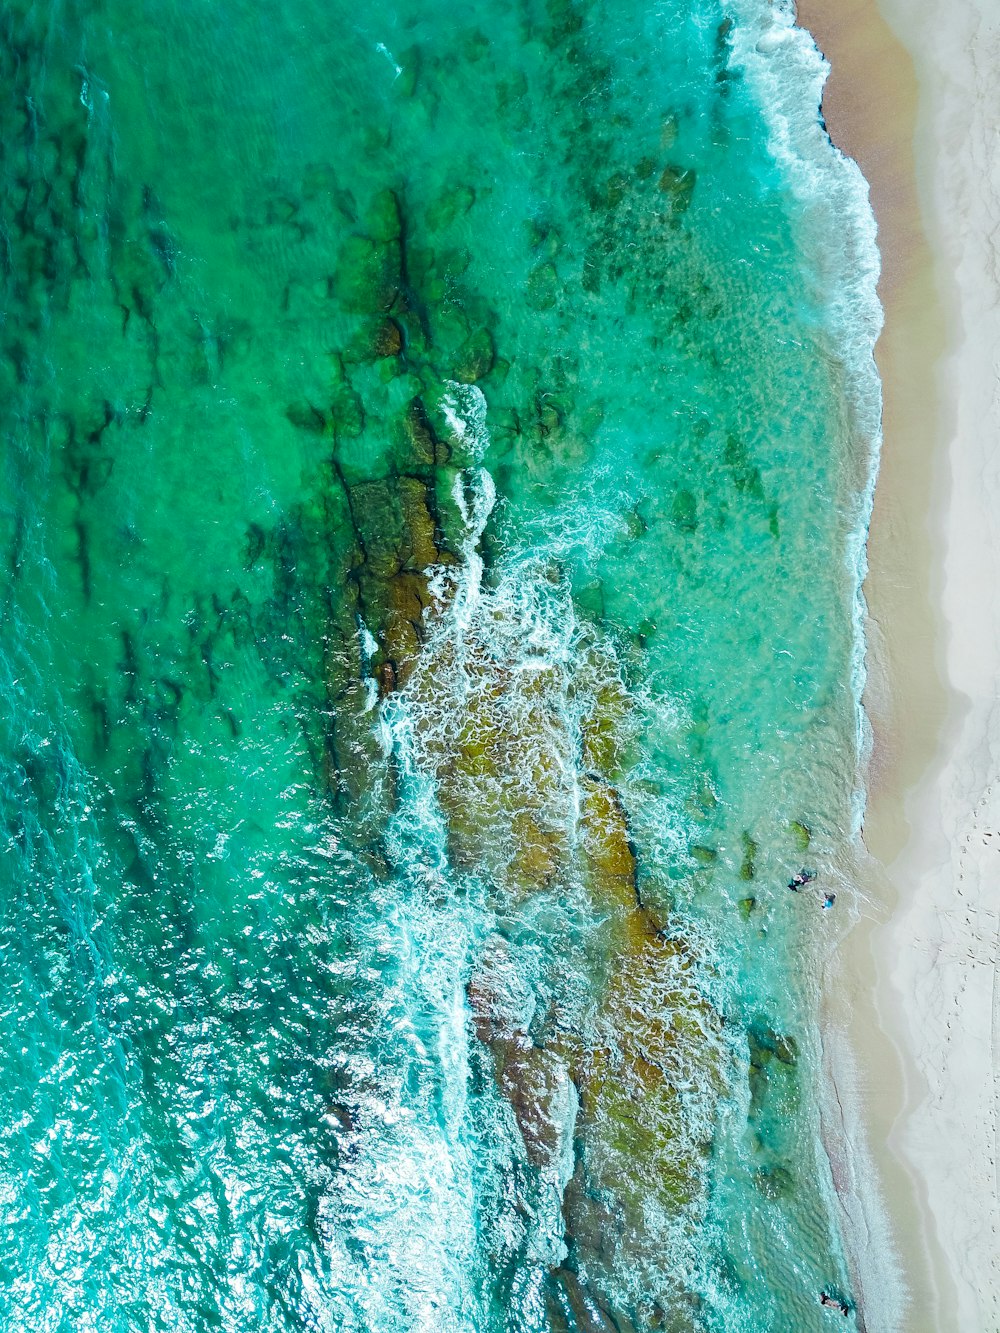 an aerial view of a beach and the ocean